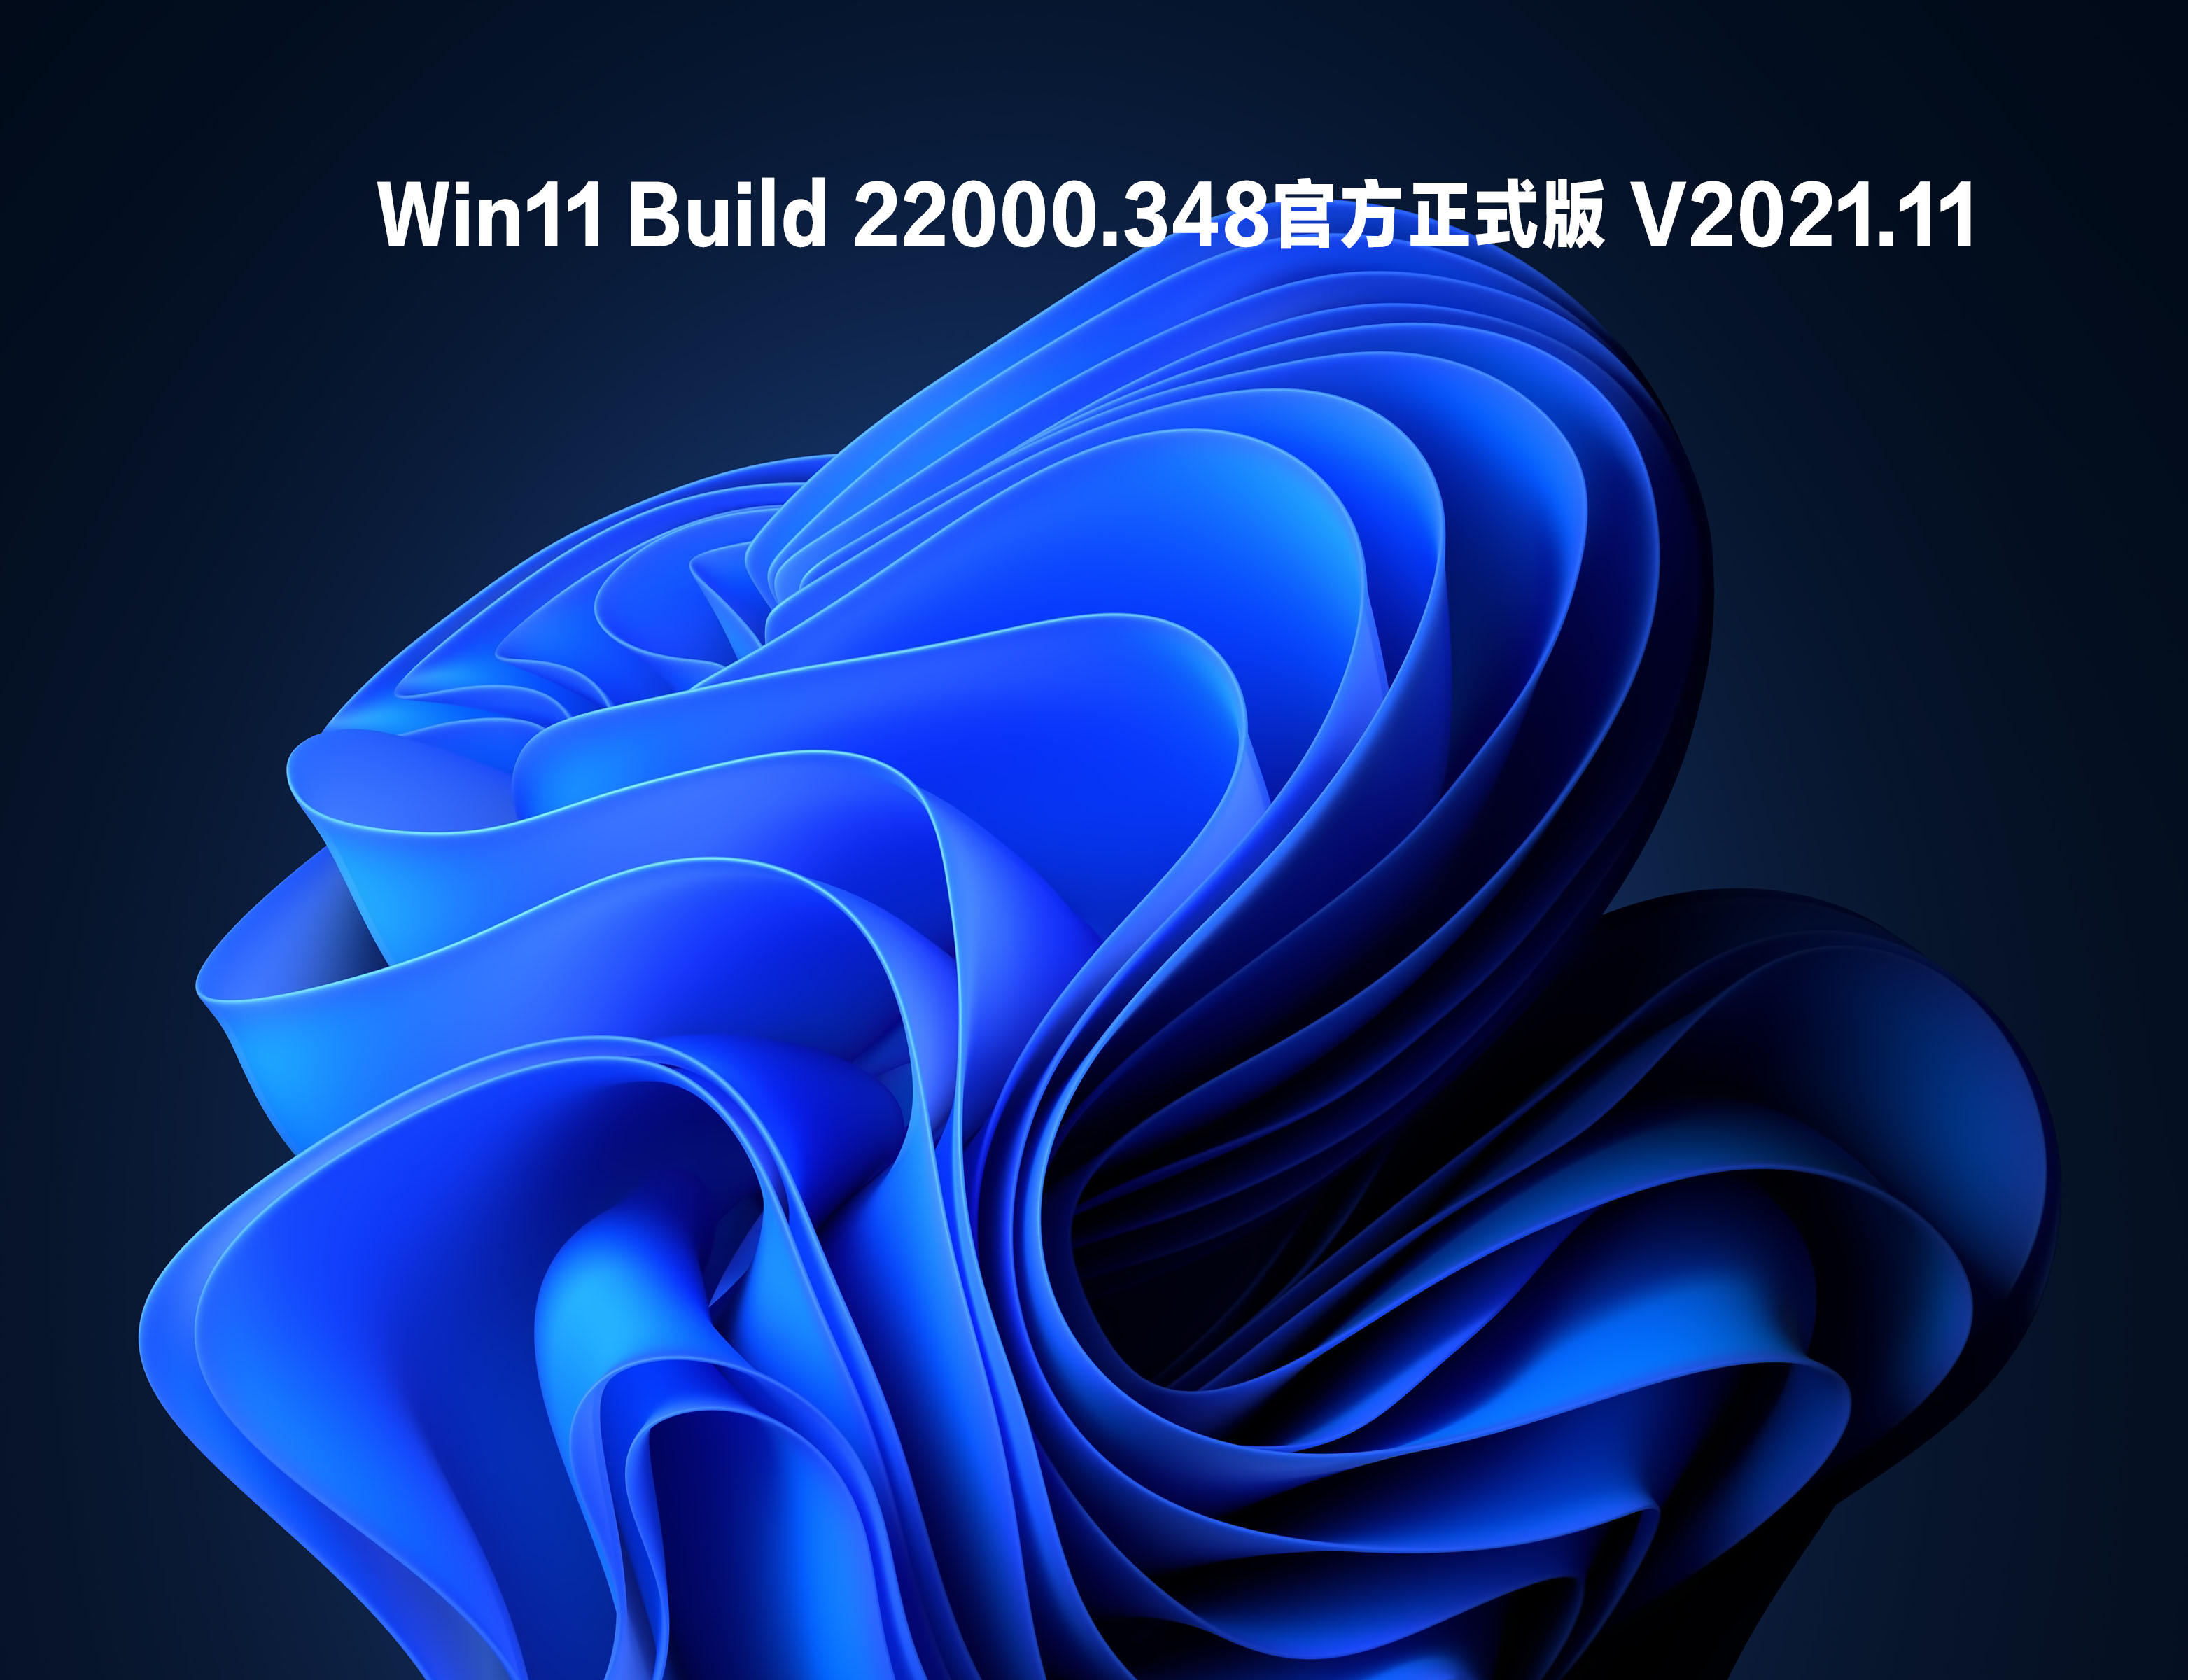 Win11 Build 22000.348官方正式版 V2021.11